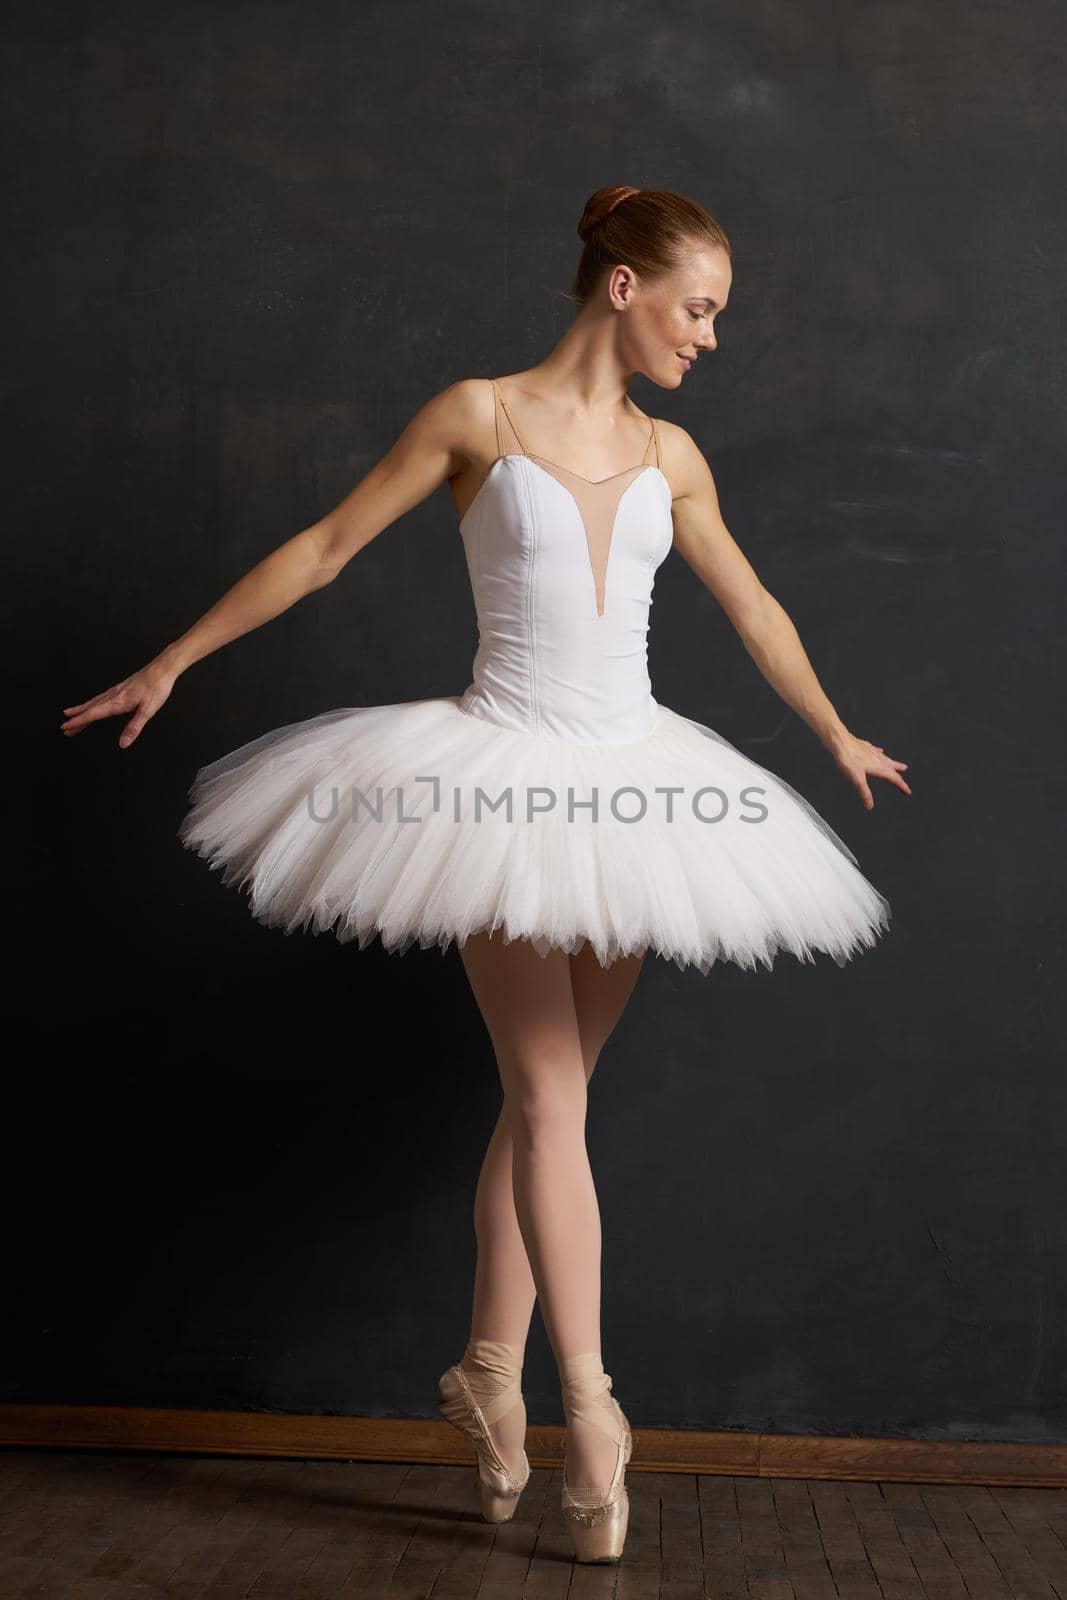 woman ballerina in a white tutu dance posing performance dark background by Vichizh